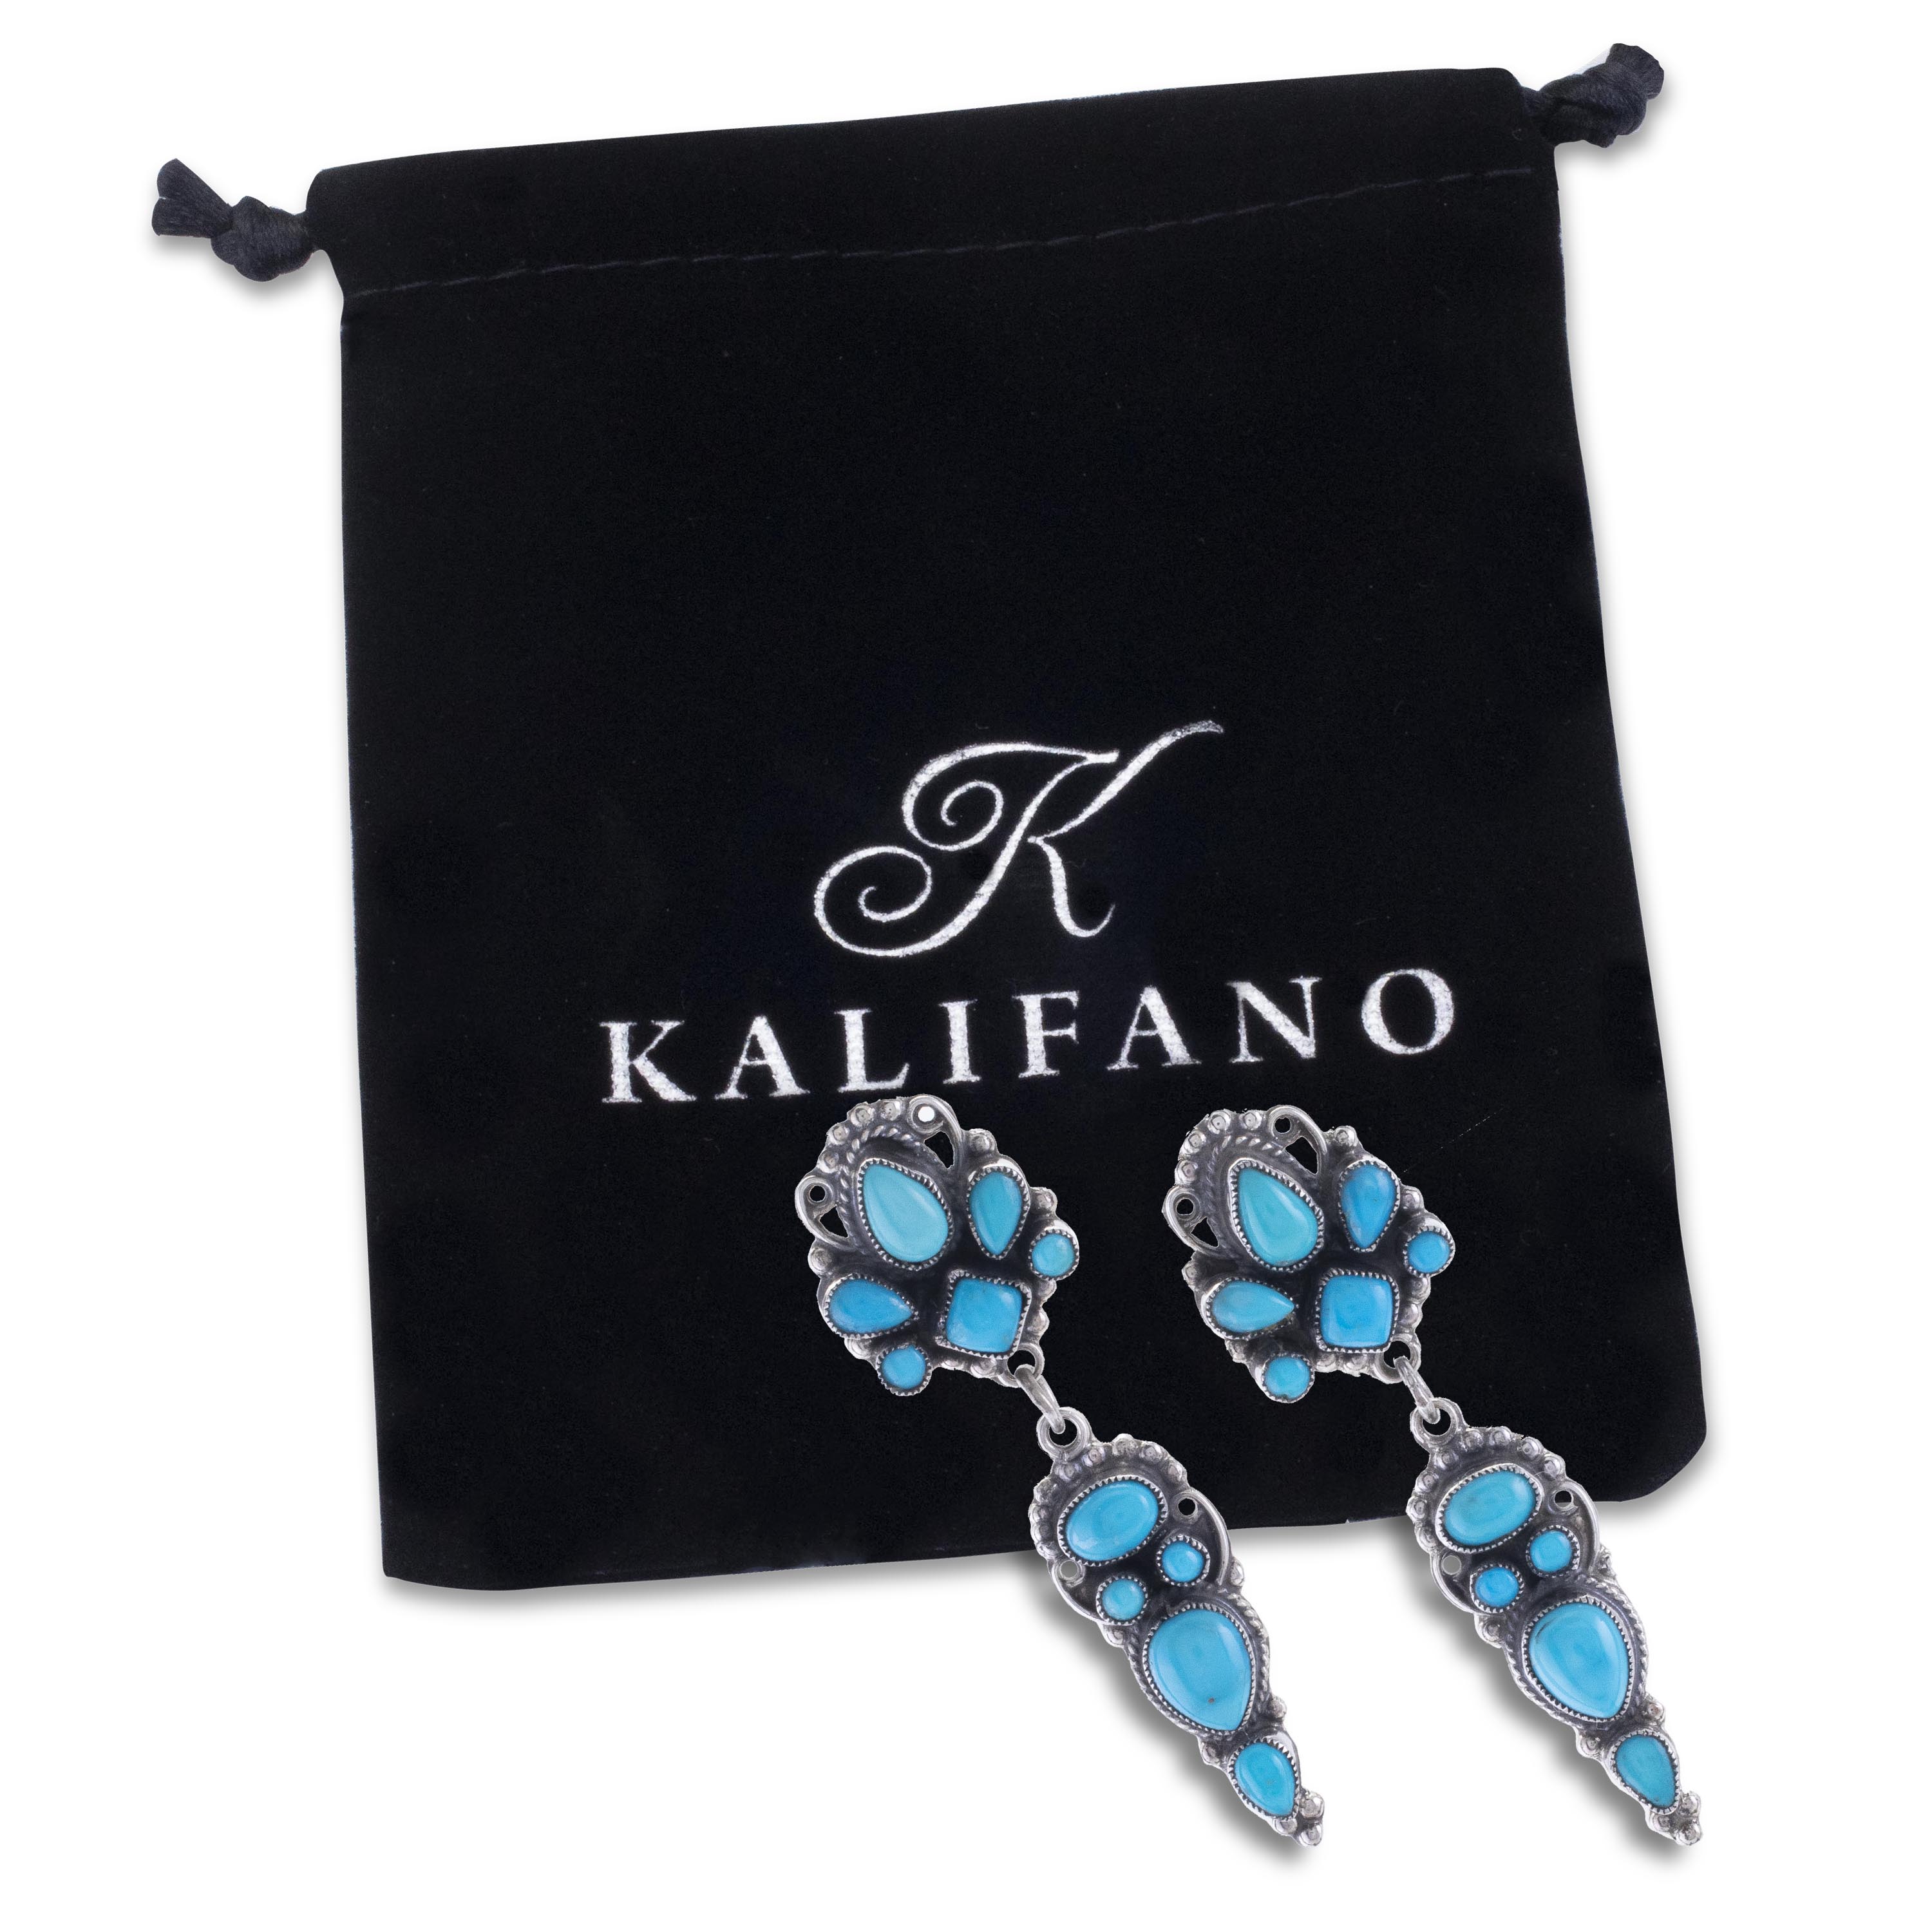 Kalifano Native American Jewelry Leo Feeney Navajo Sleeping Beauty Turquoise USA Native American Made 925 Sterling Silver Dangly Earrings NAE2200.001